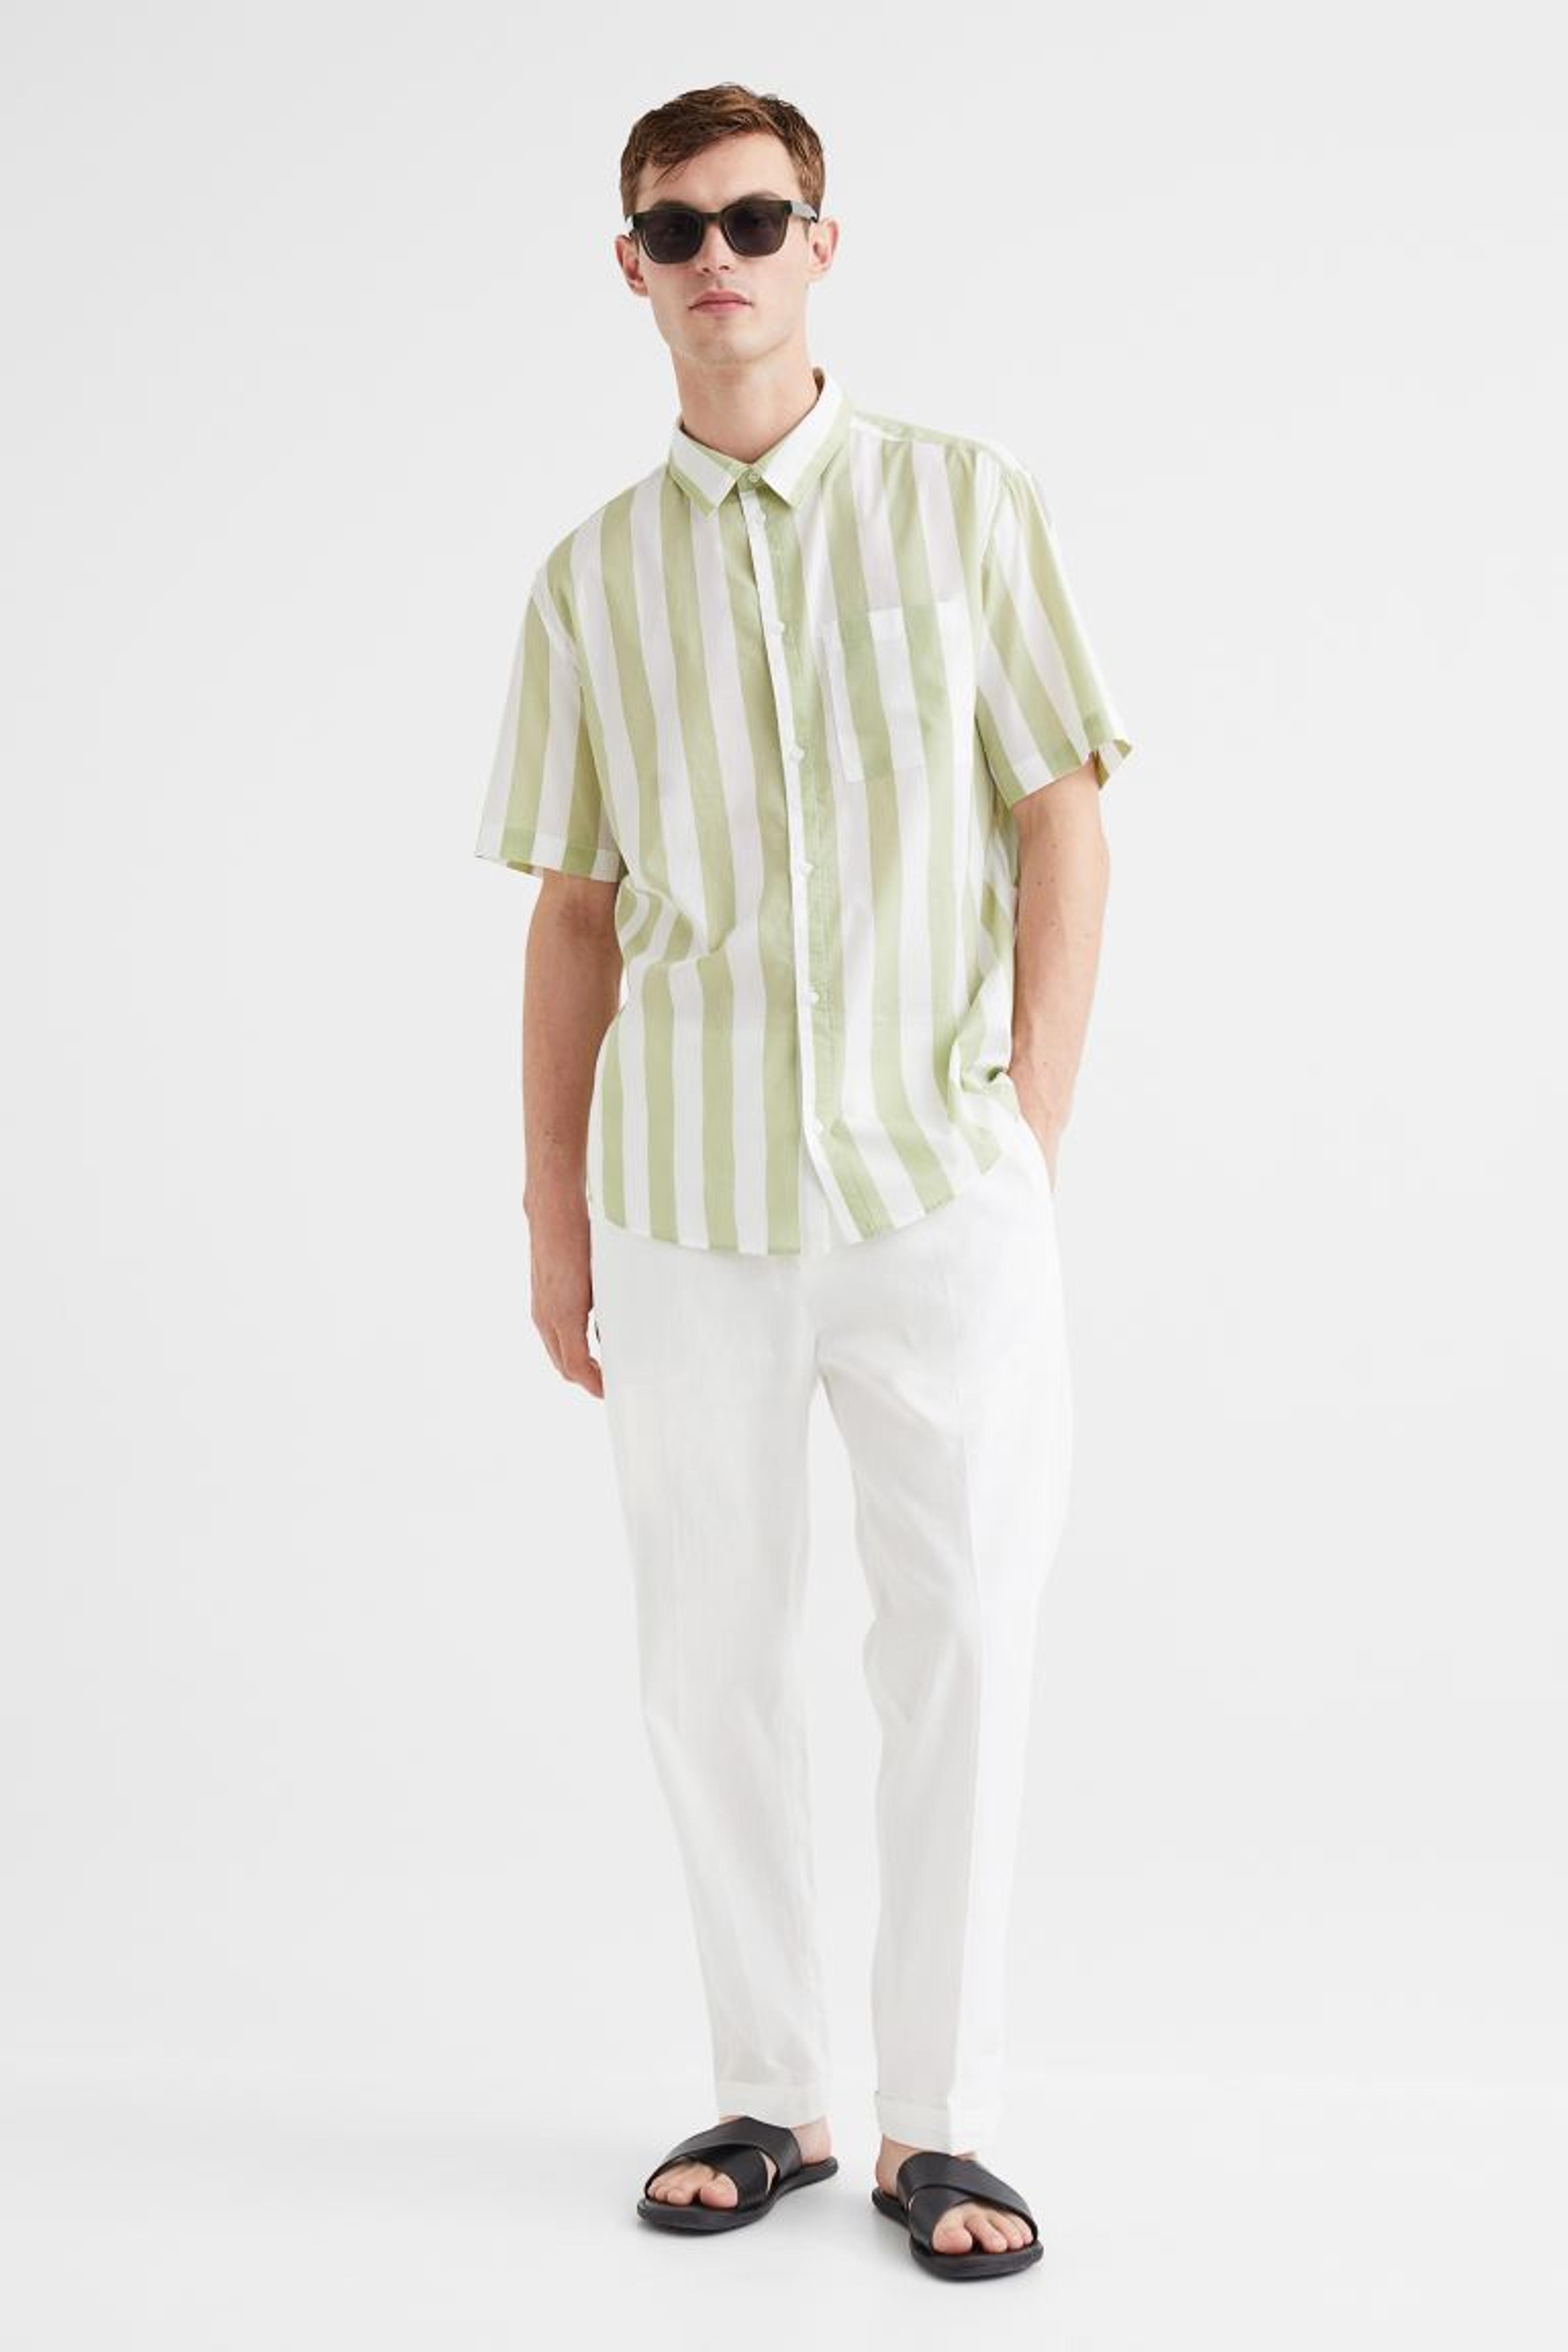 Regular Fit Cotton Shirt - Light green/white striped - Men | H&M US